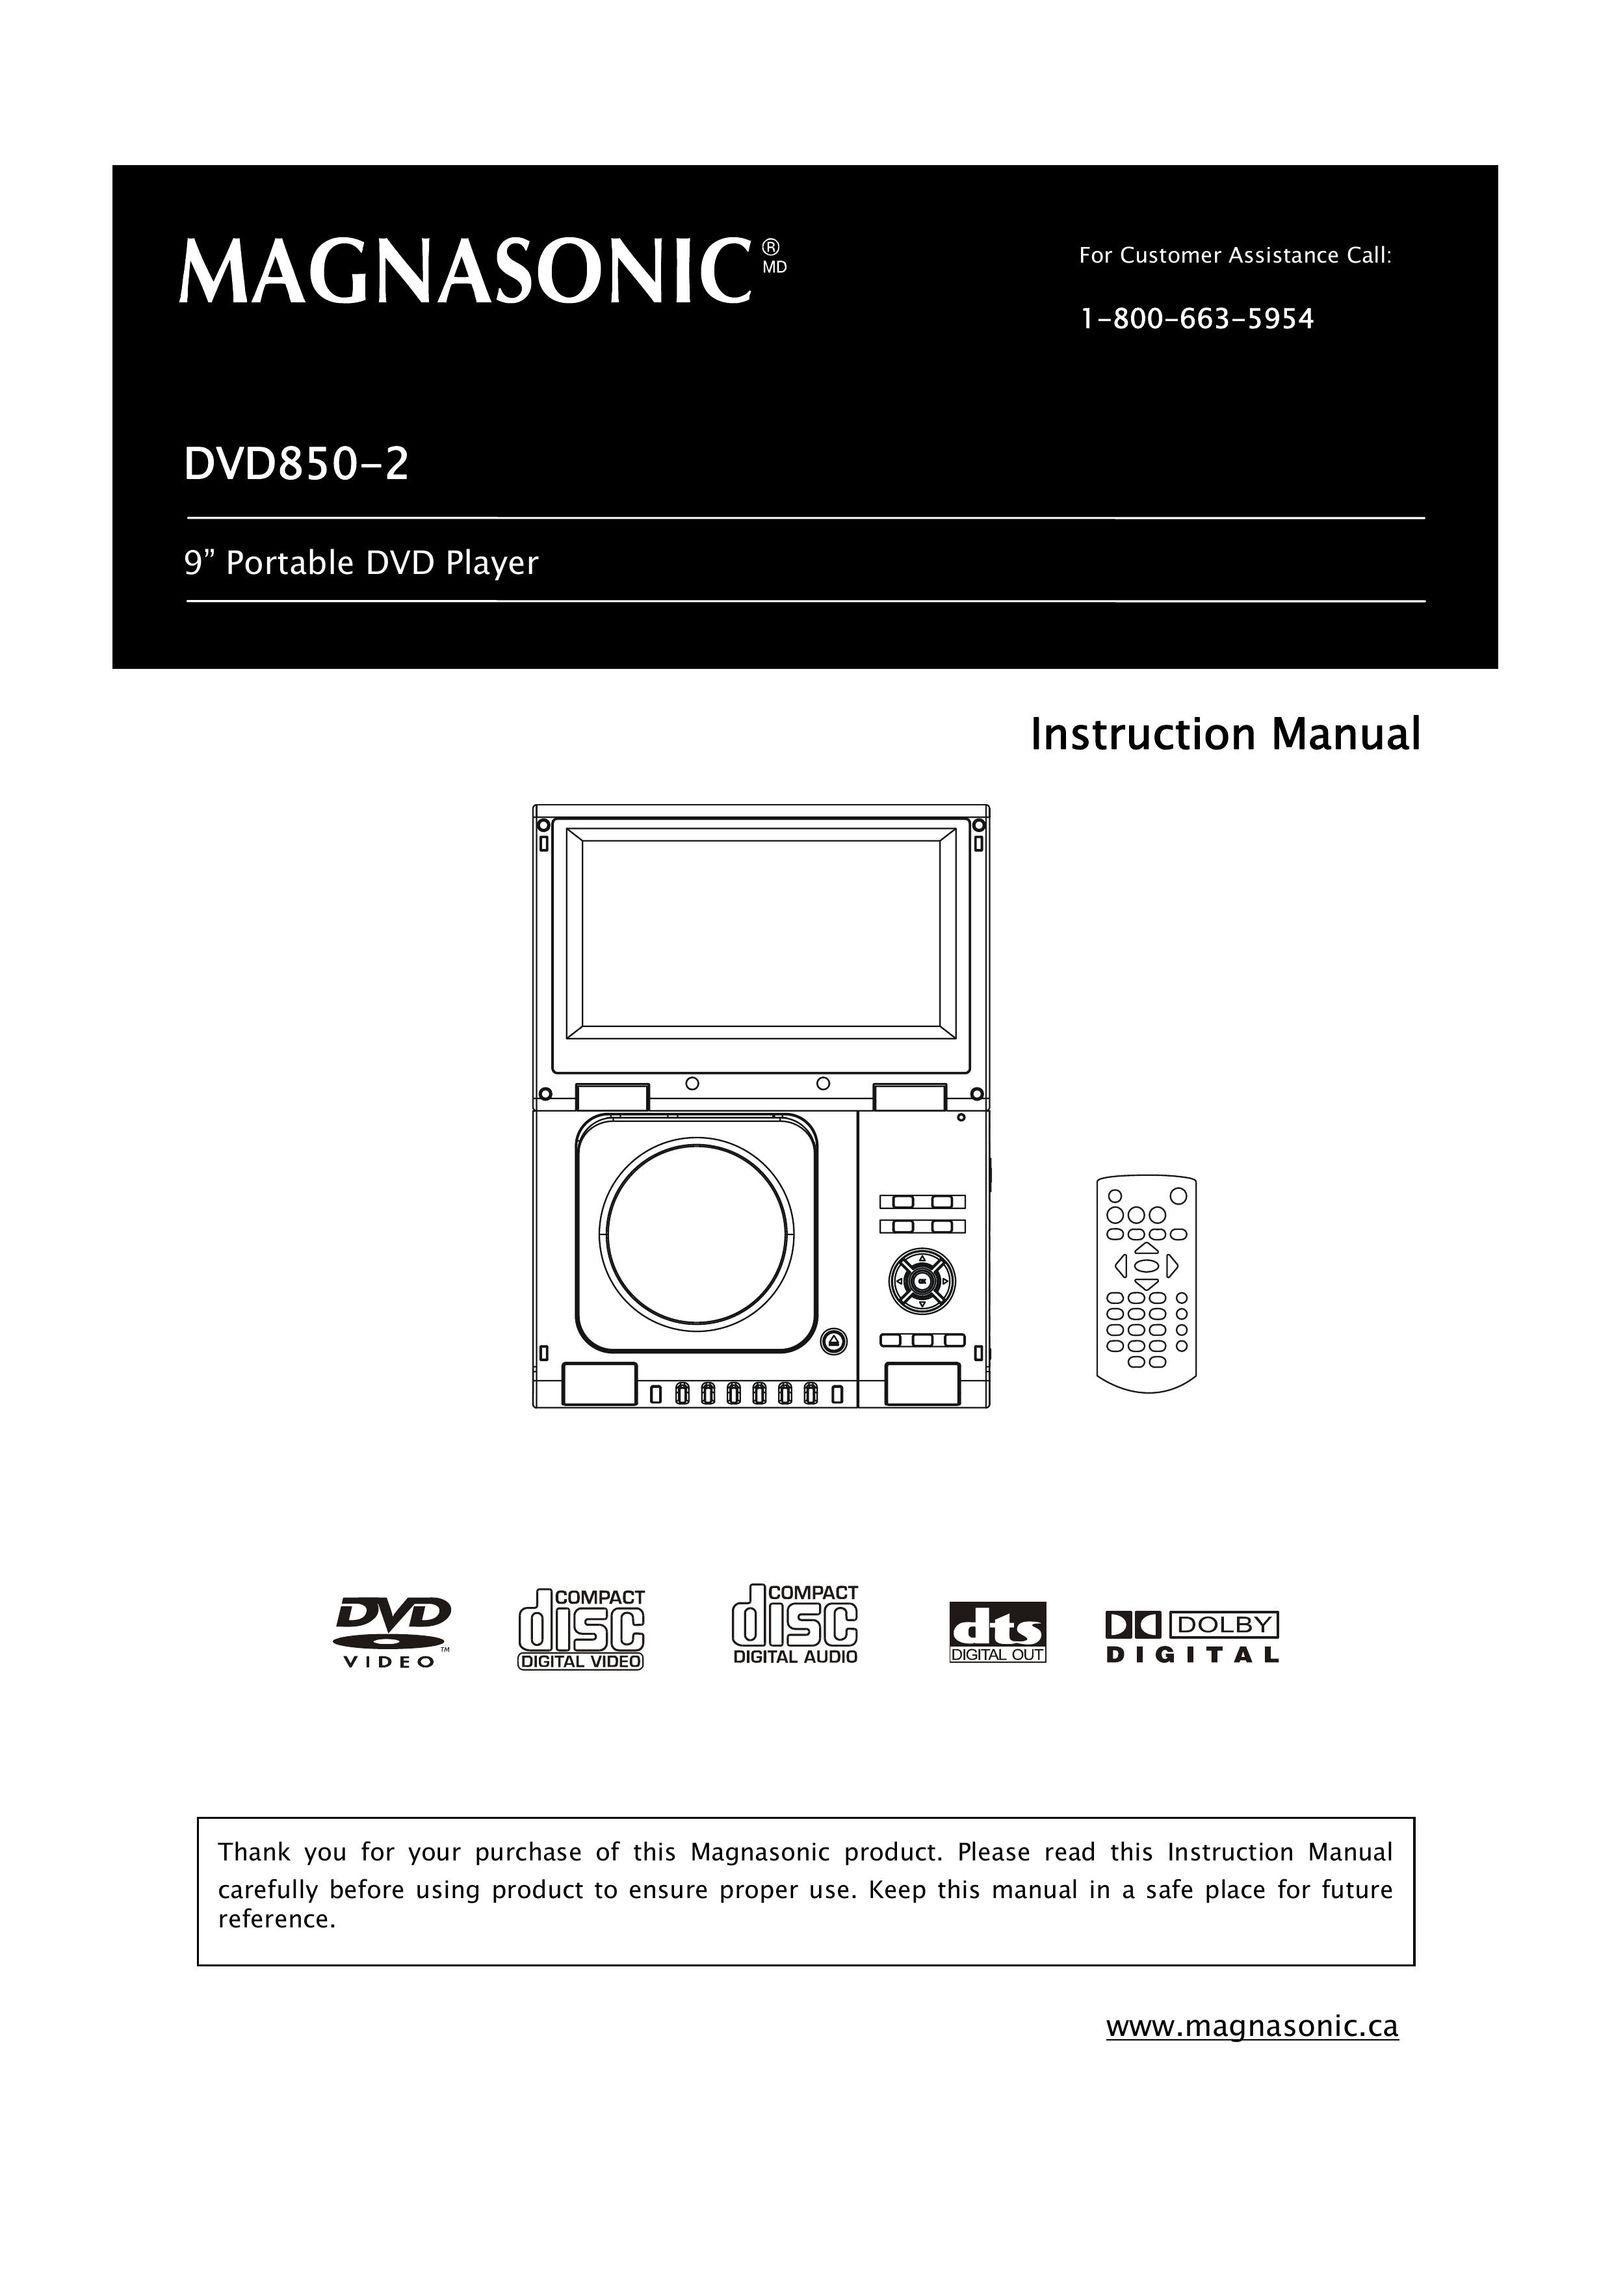 Magnasonic DVD850-2 Portable DVD Player User Manual